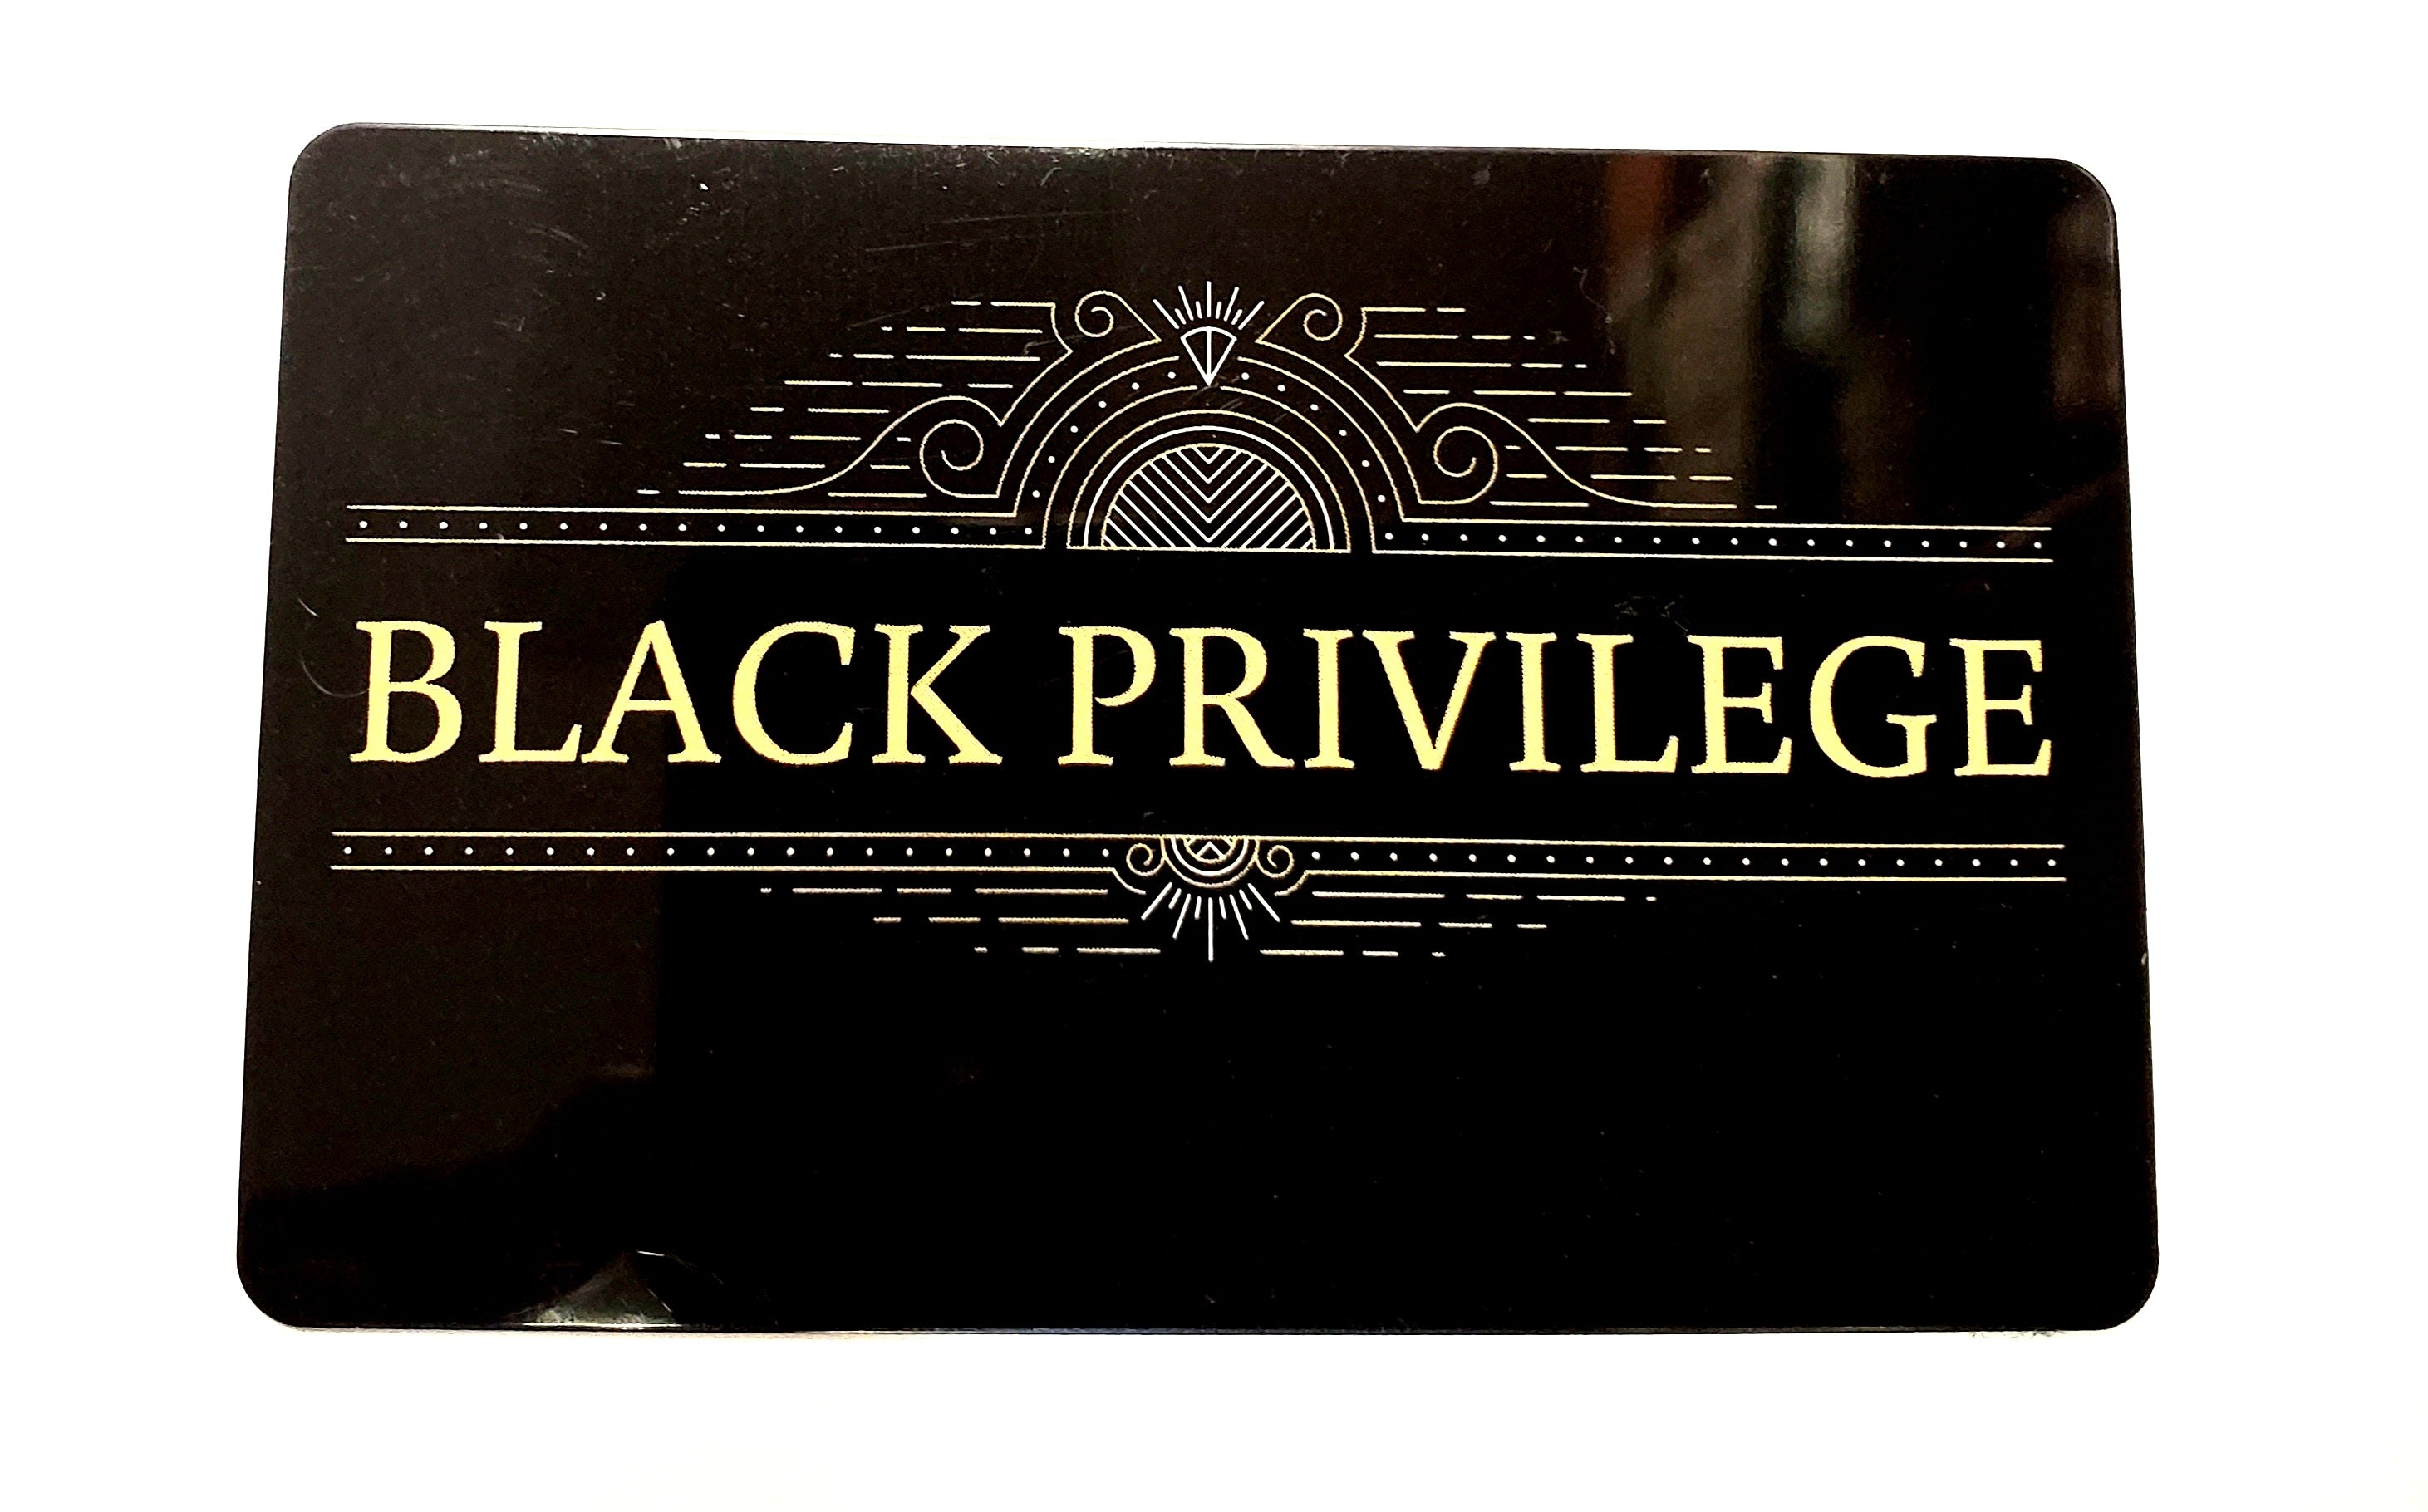 White Privilege Card Ebay / Https China Diplo De Blob 1505032